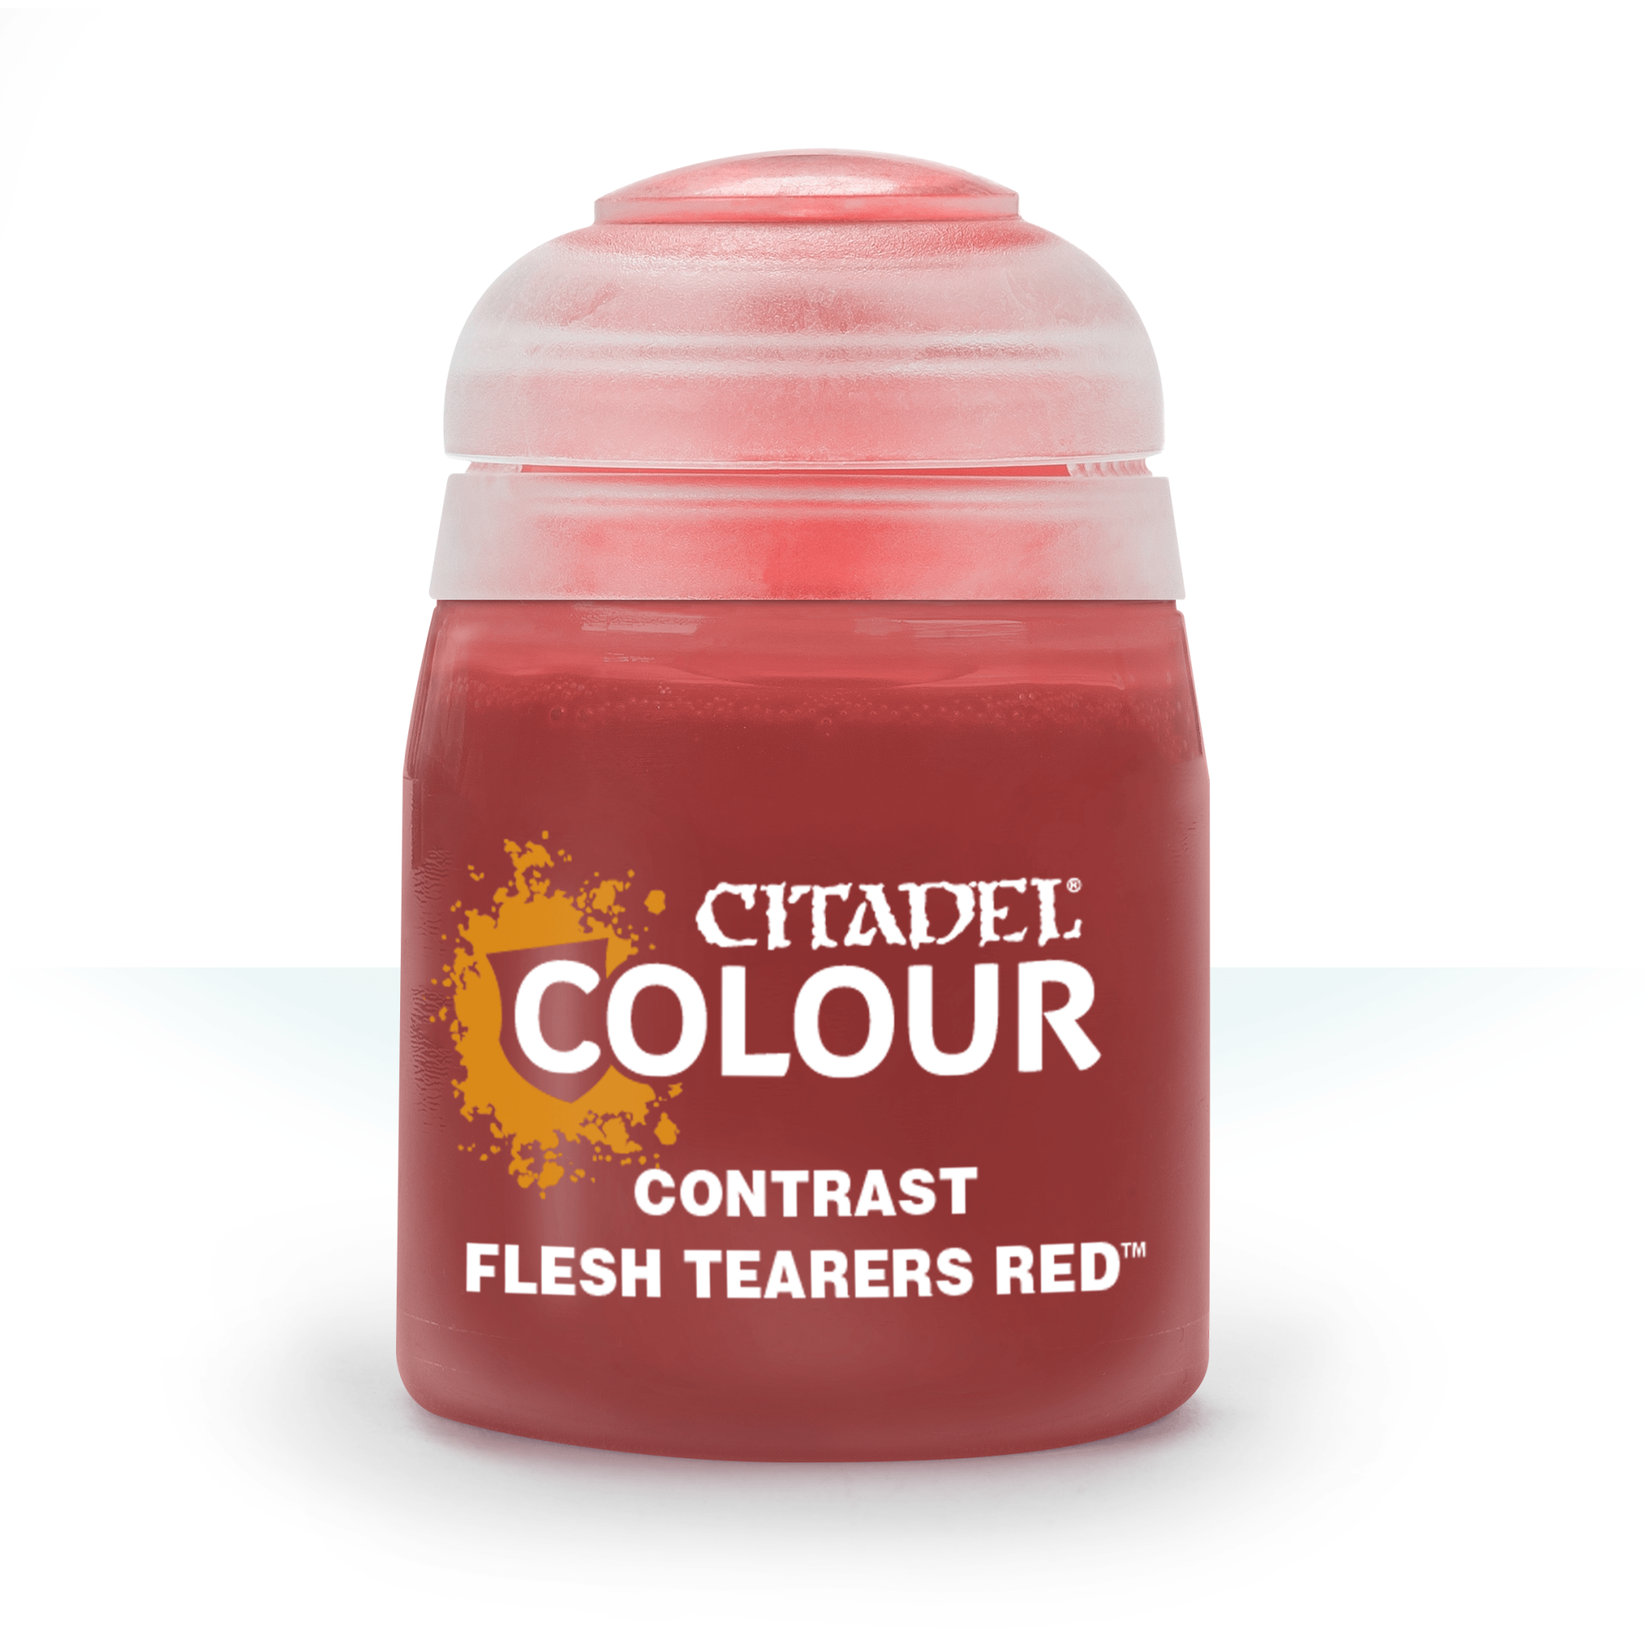 Citadel Flesh Tearers Red